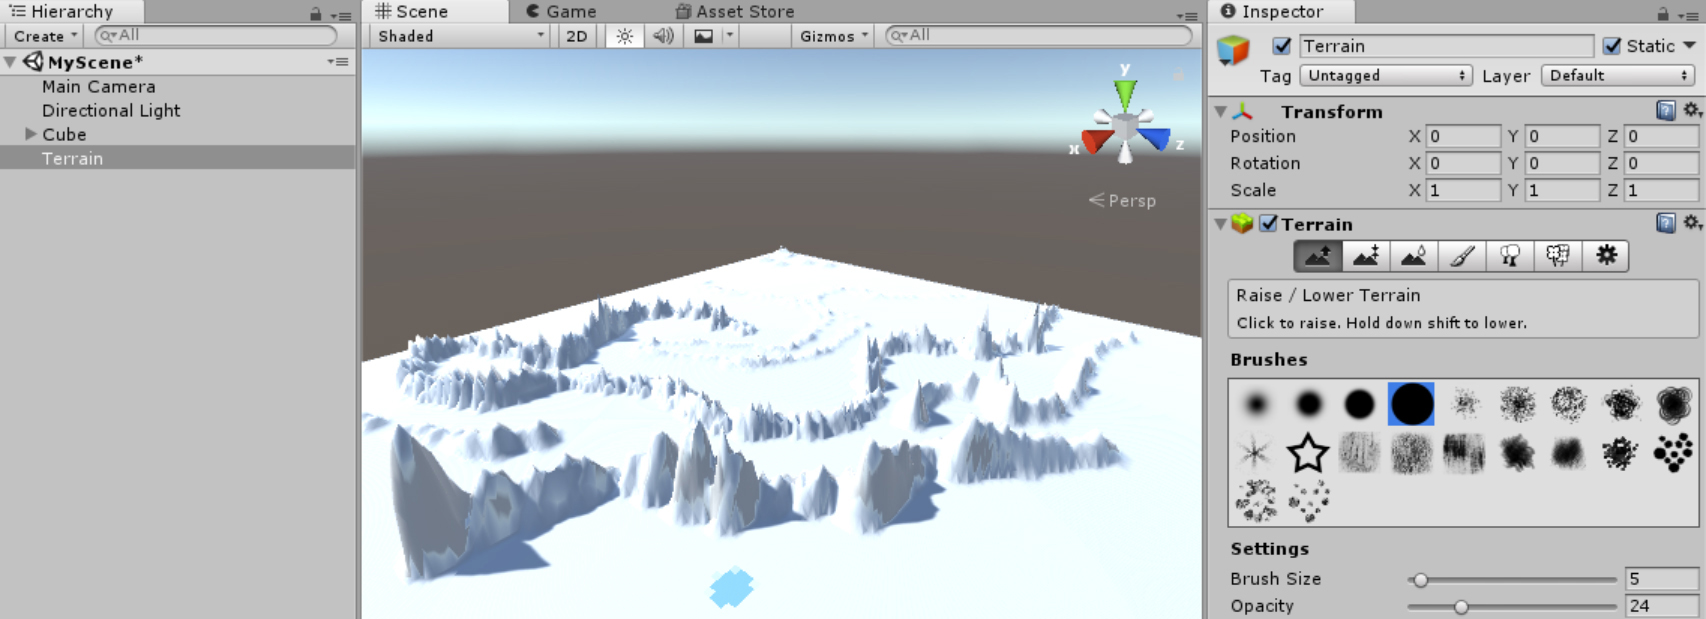 A screenshot showing terrain created in Unity